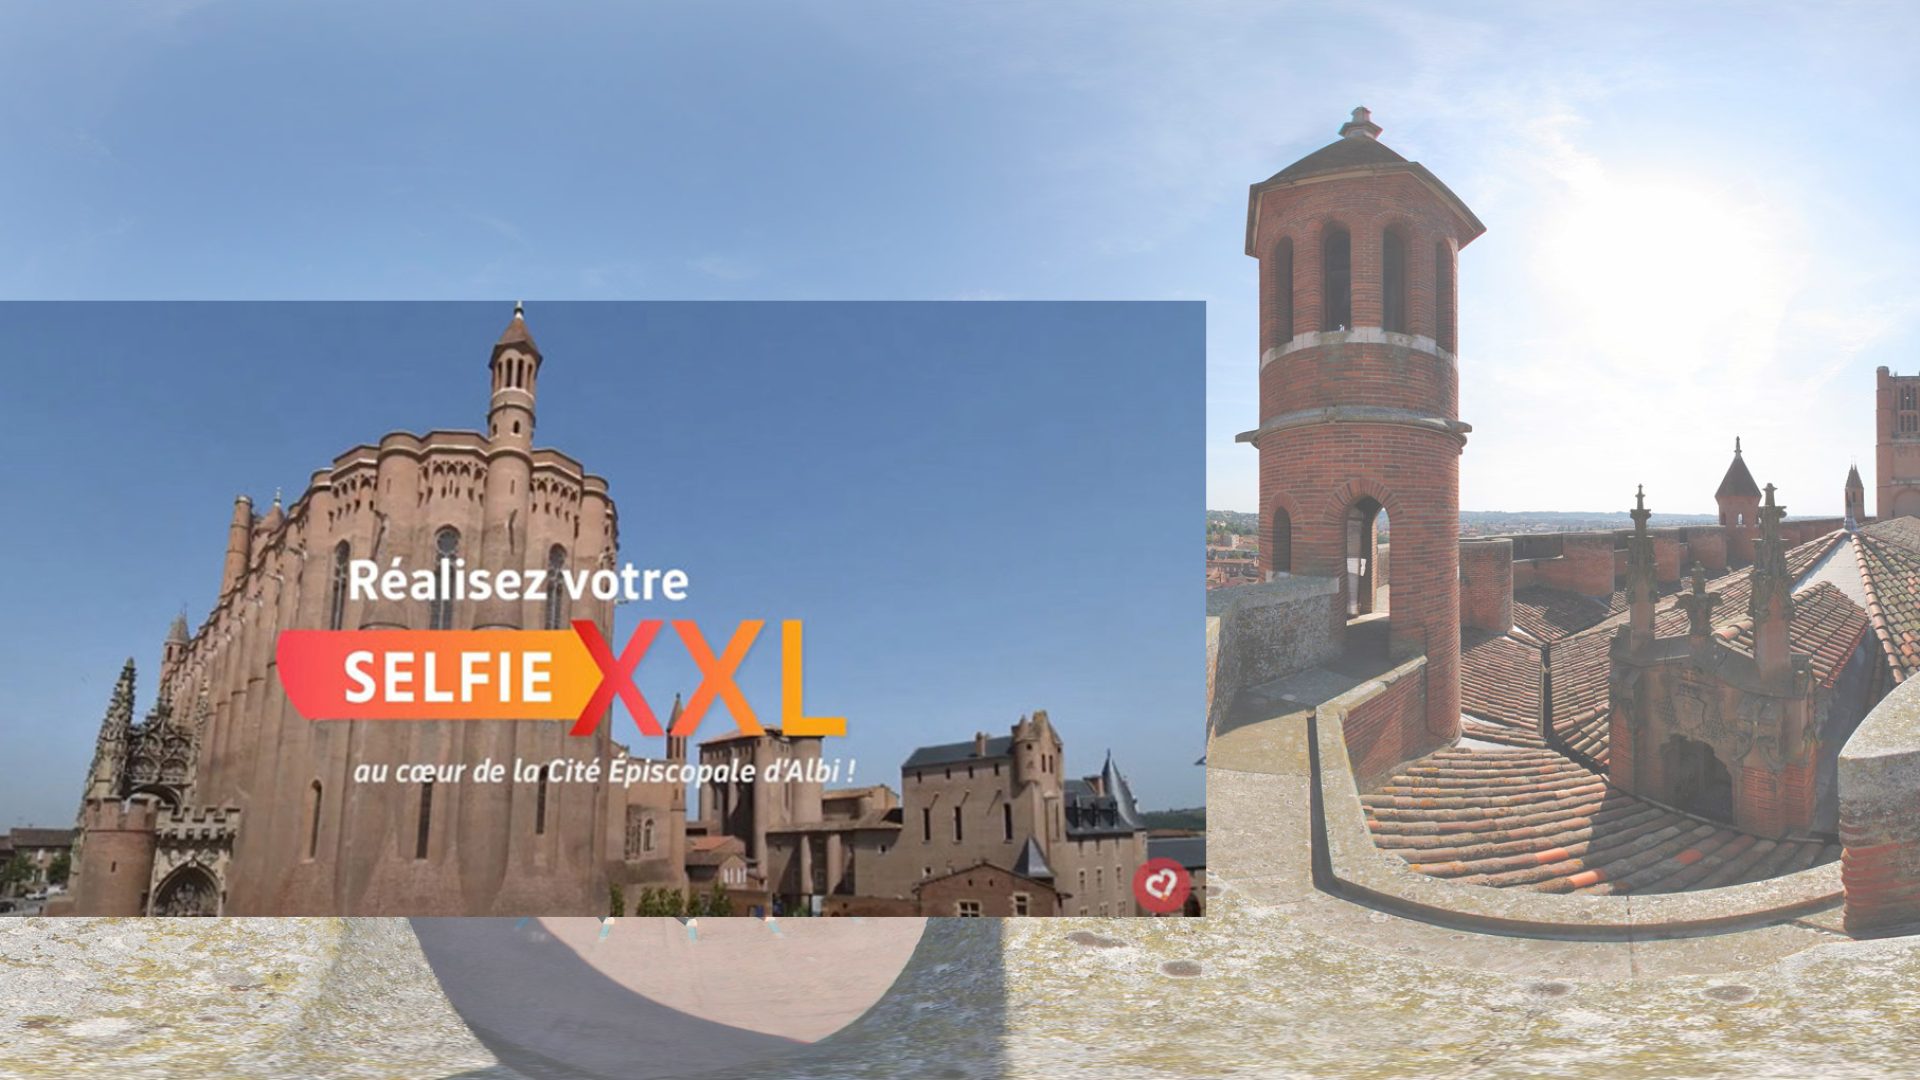 Albi - Selfie XXL a Place Sainte Cécile, condividi le tue vacanze